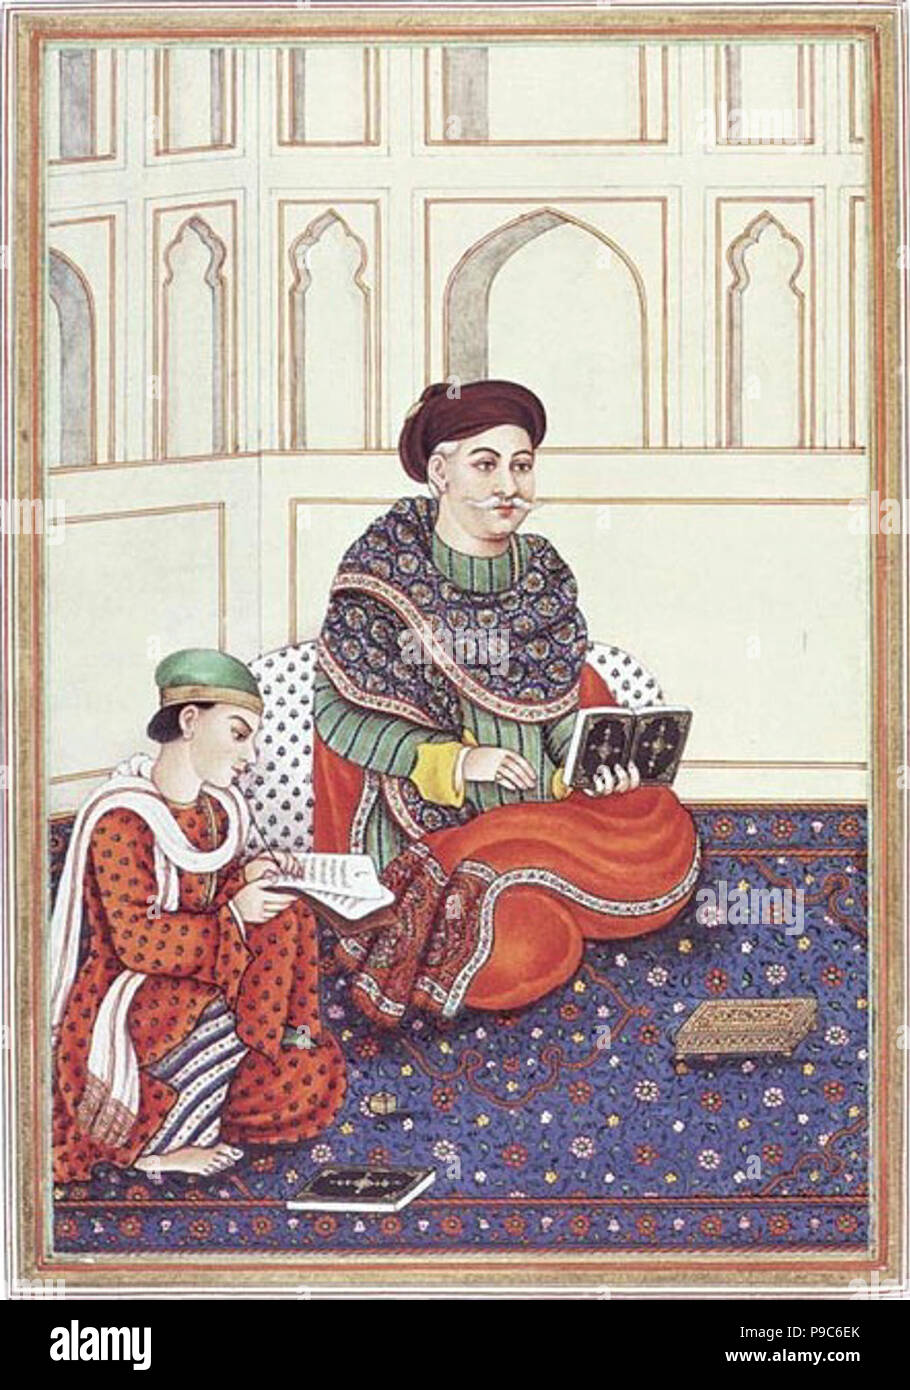 A Khattri nobleman, in 'Kitab-i tasrih al-aqvam' by Col. James Skinner, aka Sikandar (1778-1841). Stock Photo